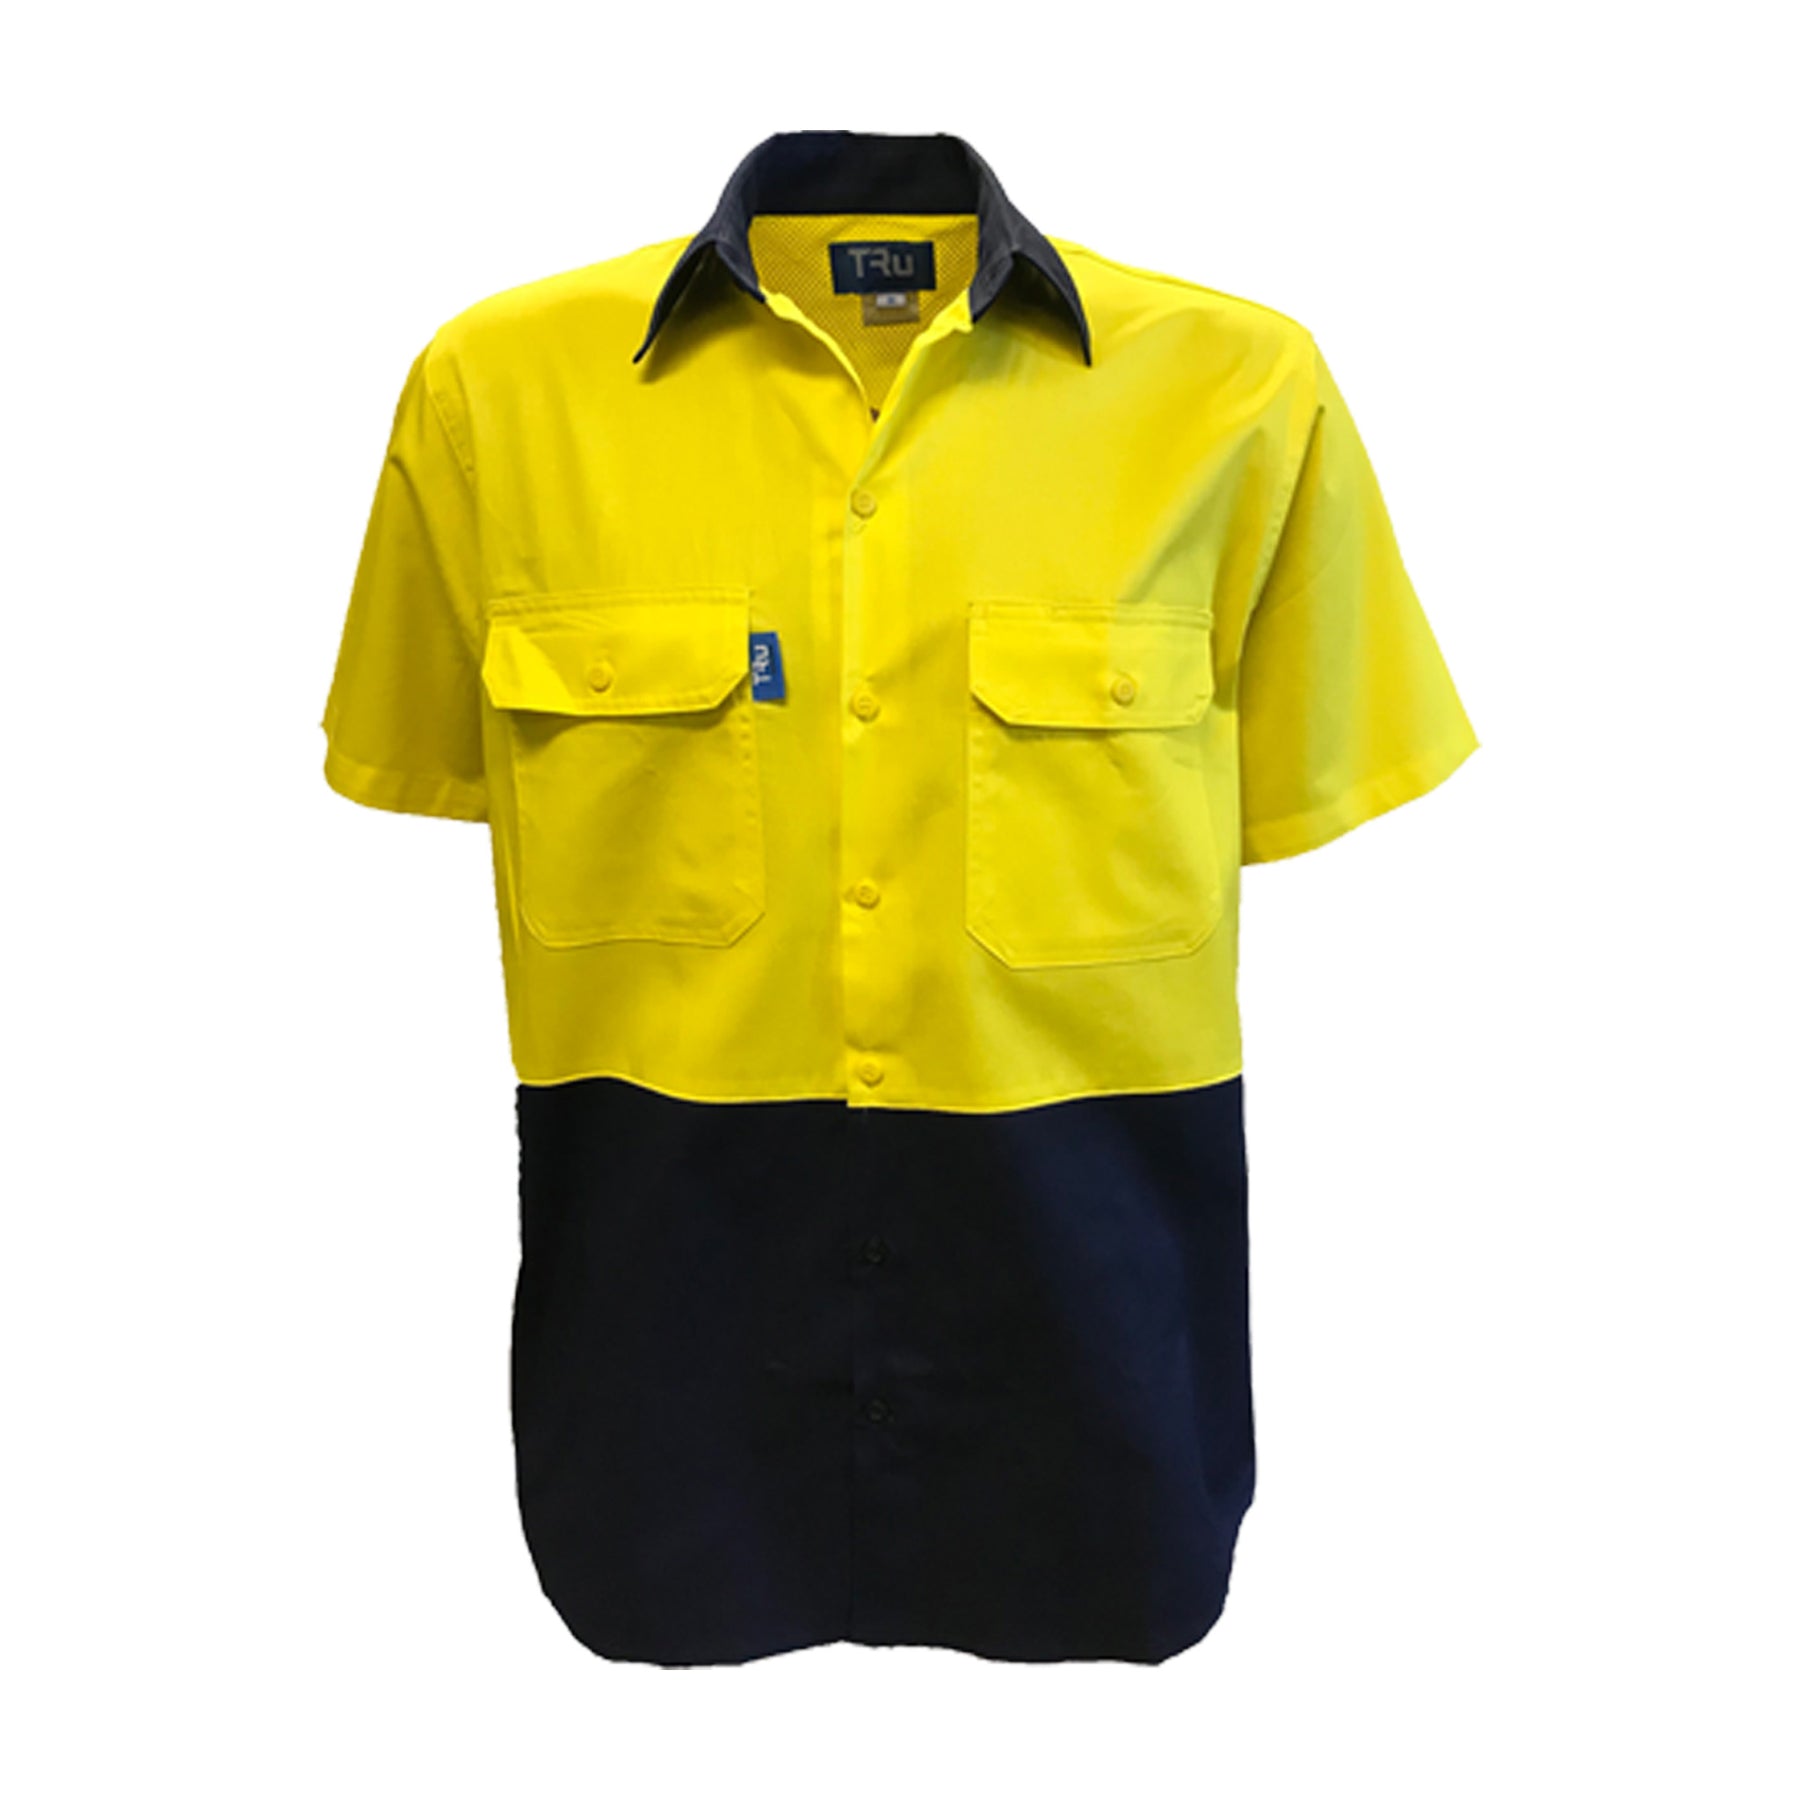 lightweight vented short sleeve shirt in yellow navy